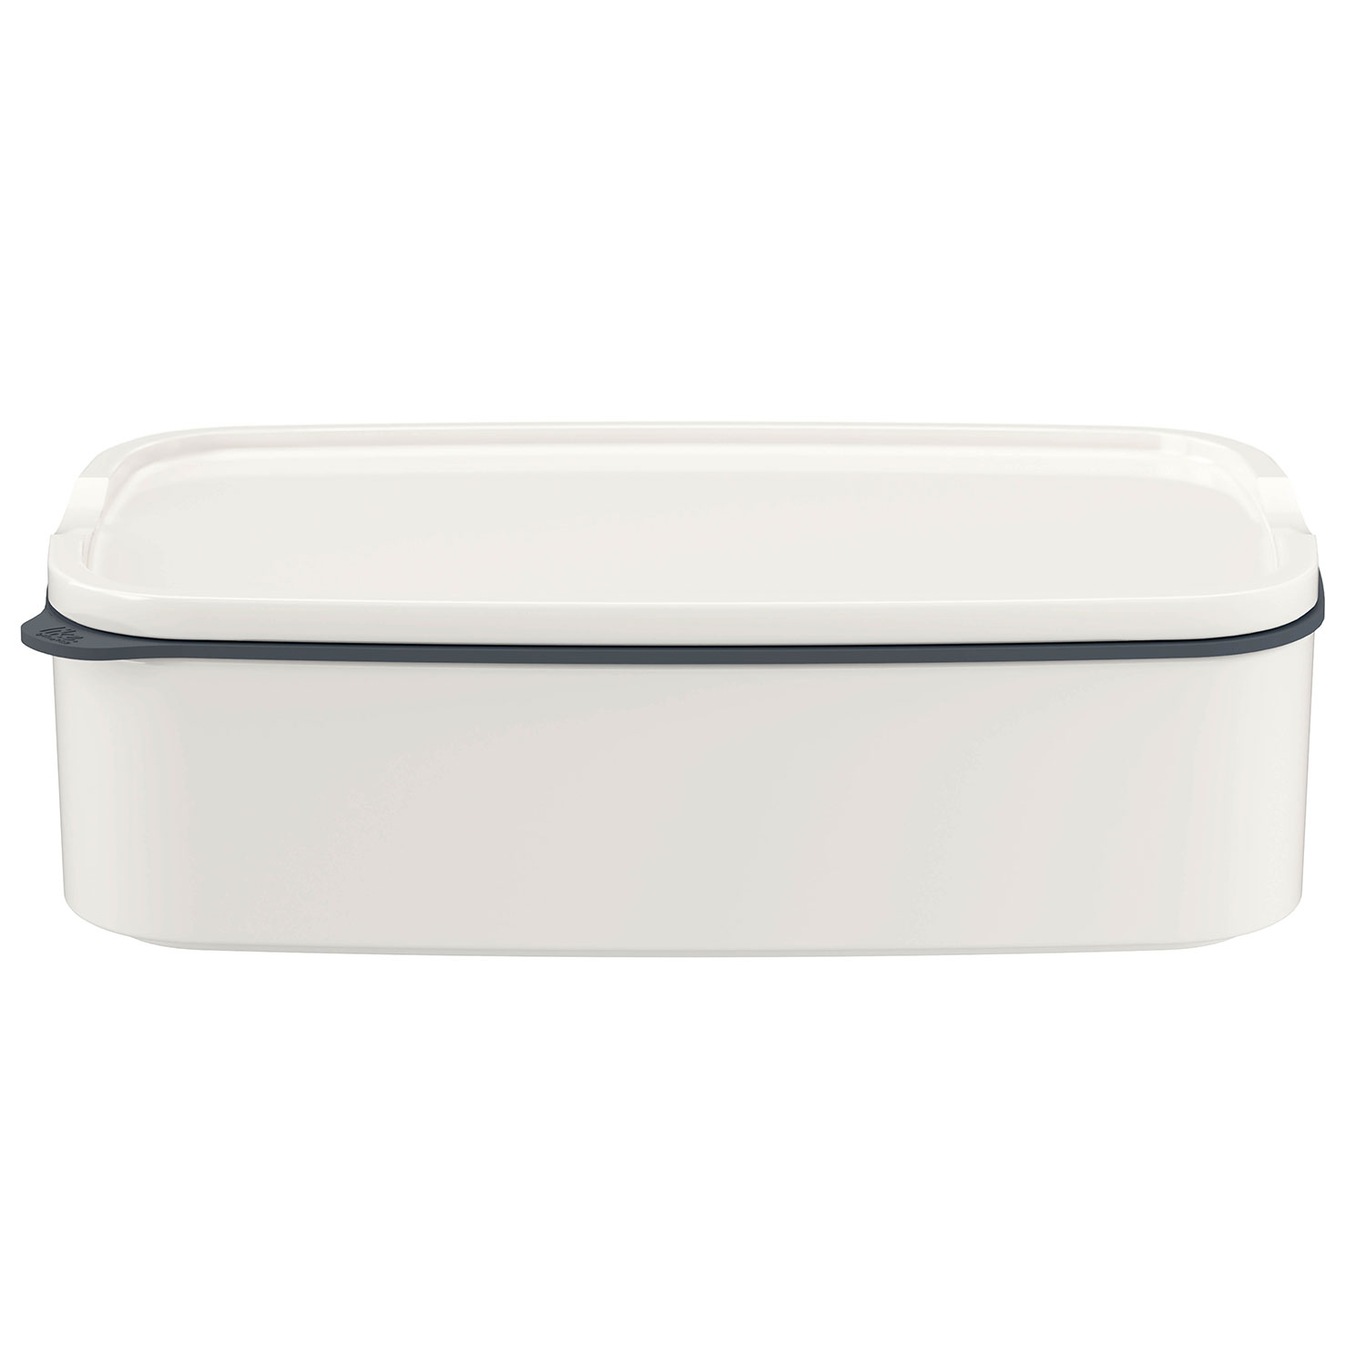 https://royaldesign.com/image/2/villeroy-boch-togotostay-lunch-box-white-20x13x6-cm-0?w=800&quality=80